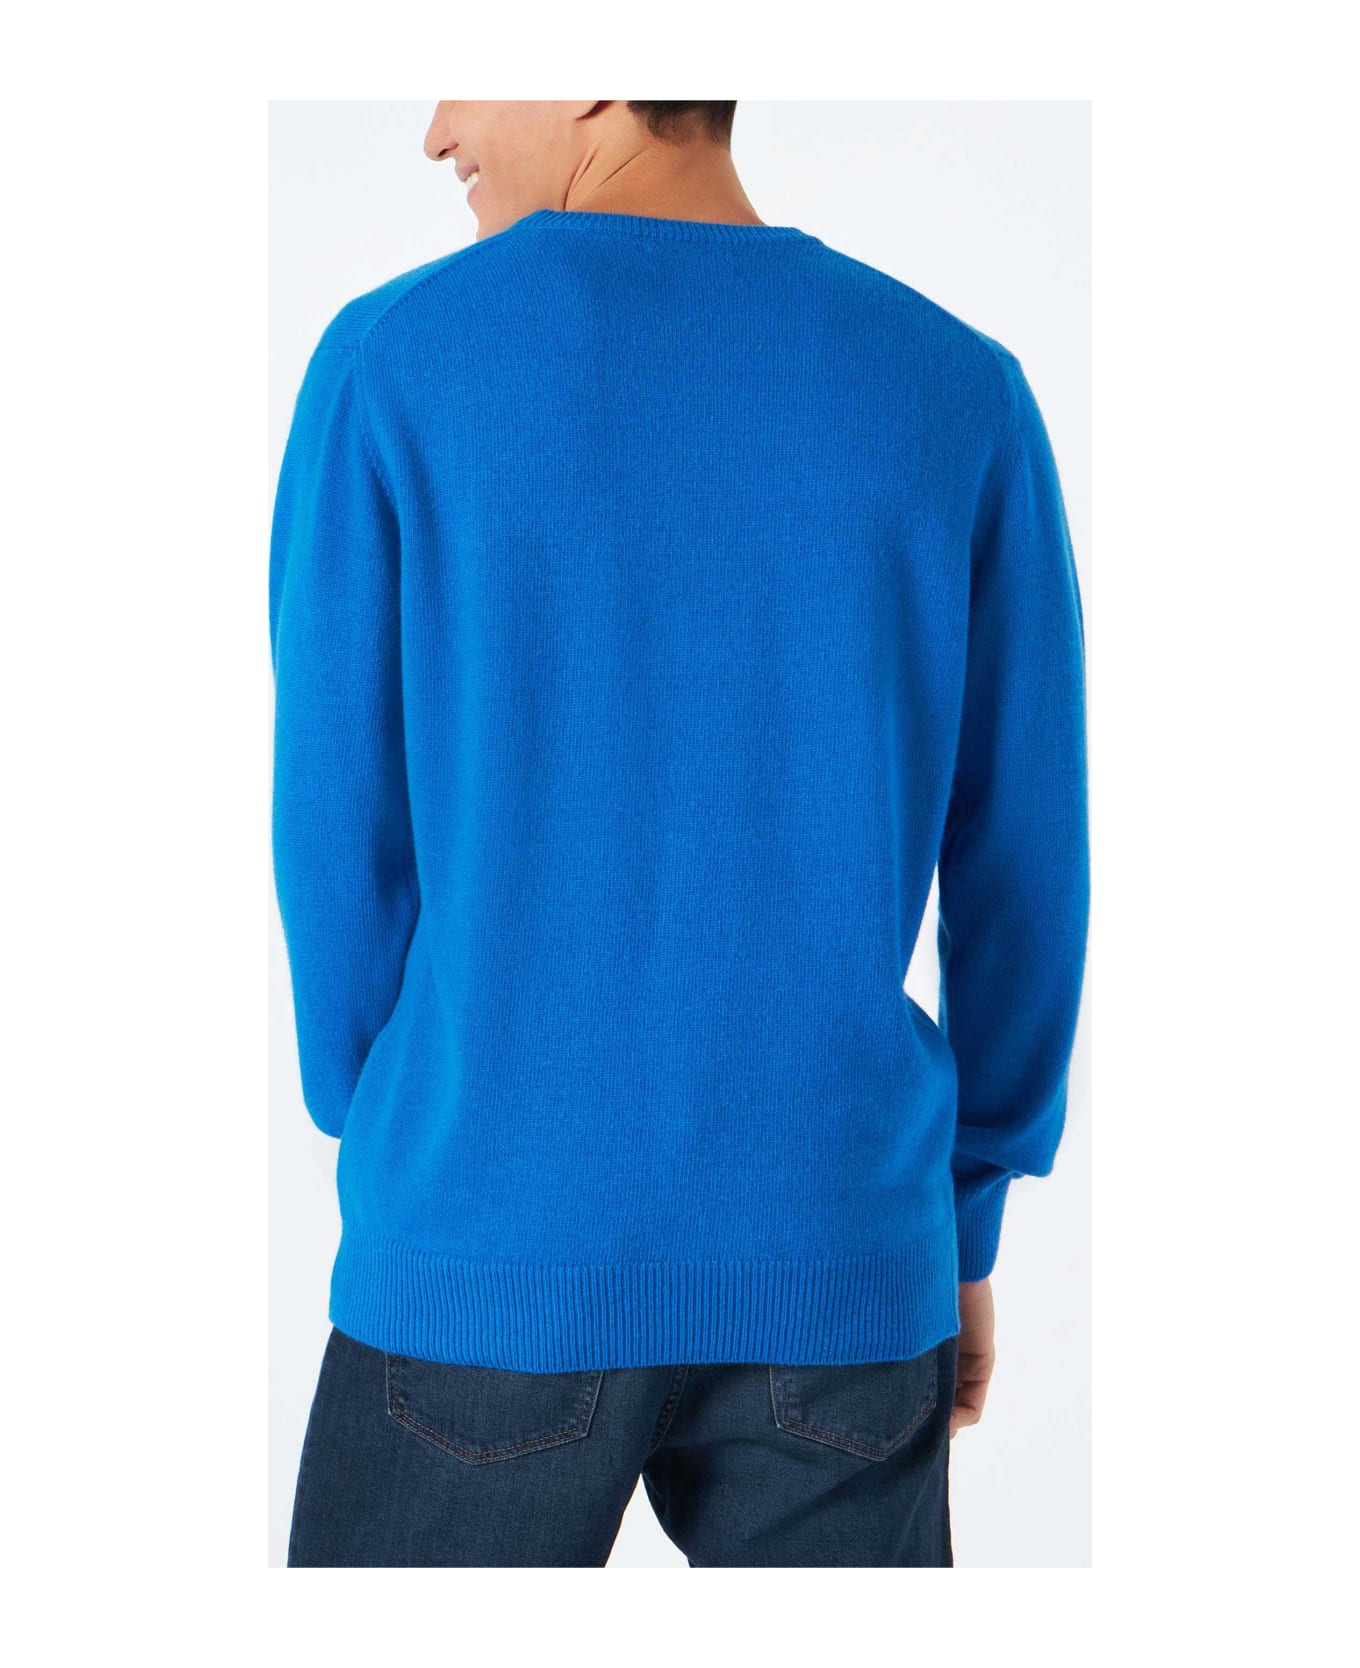 MC2 Saint Barth Man Sweater With Roma Padel Club Jacquard Print - BLUE フリース